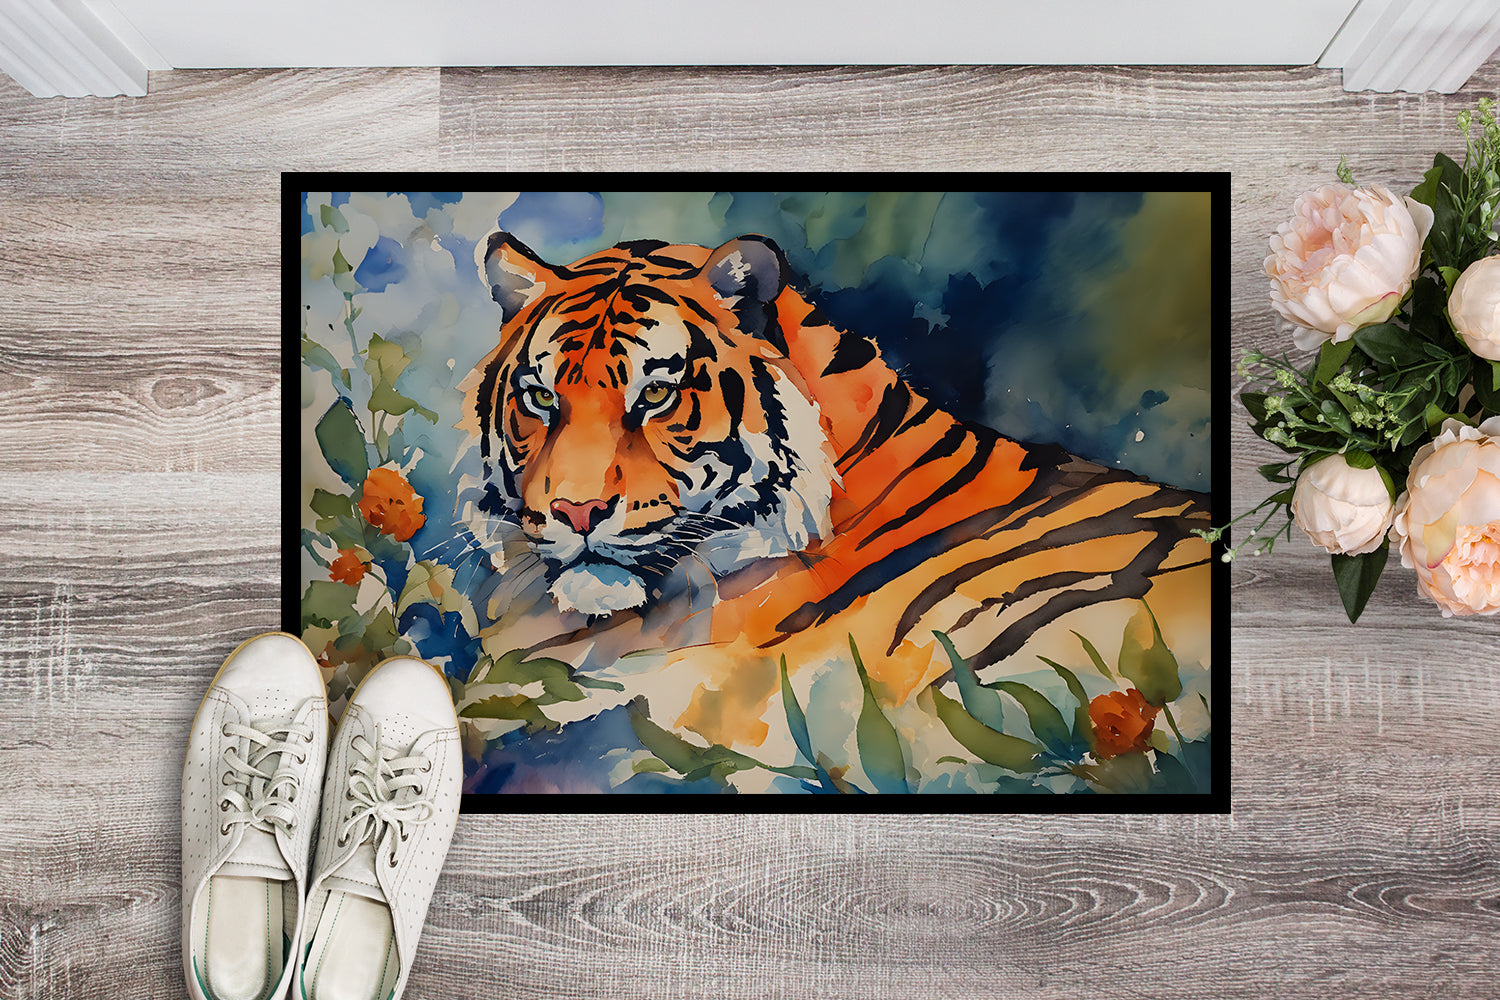 Buy this Tiger Doormat